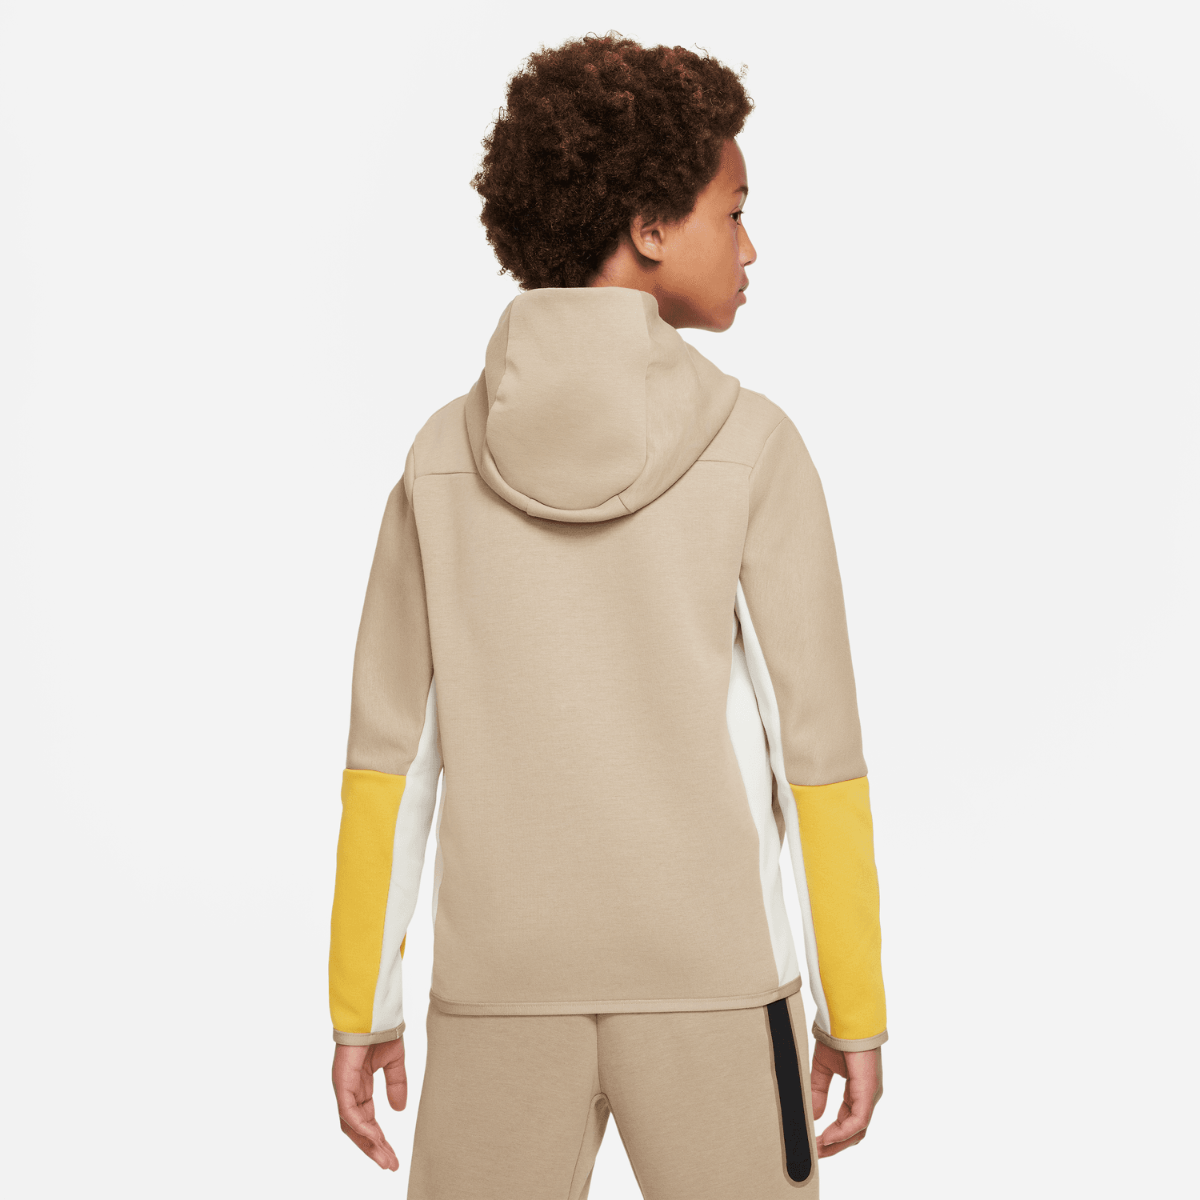 Chaqueta Nike Tech Fleece Junior - Beige/Blanco/Amarillo